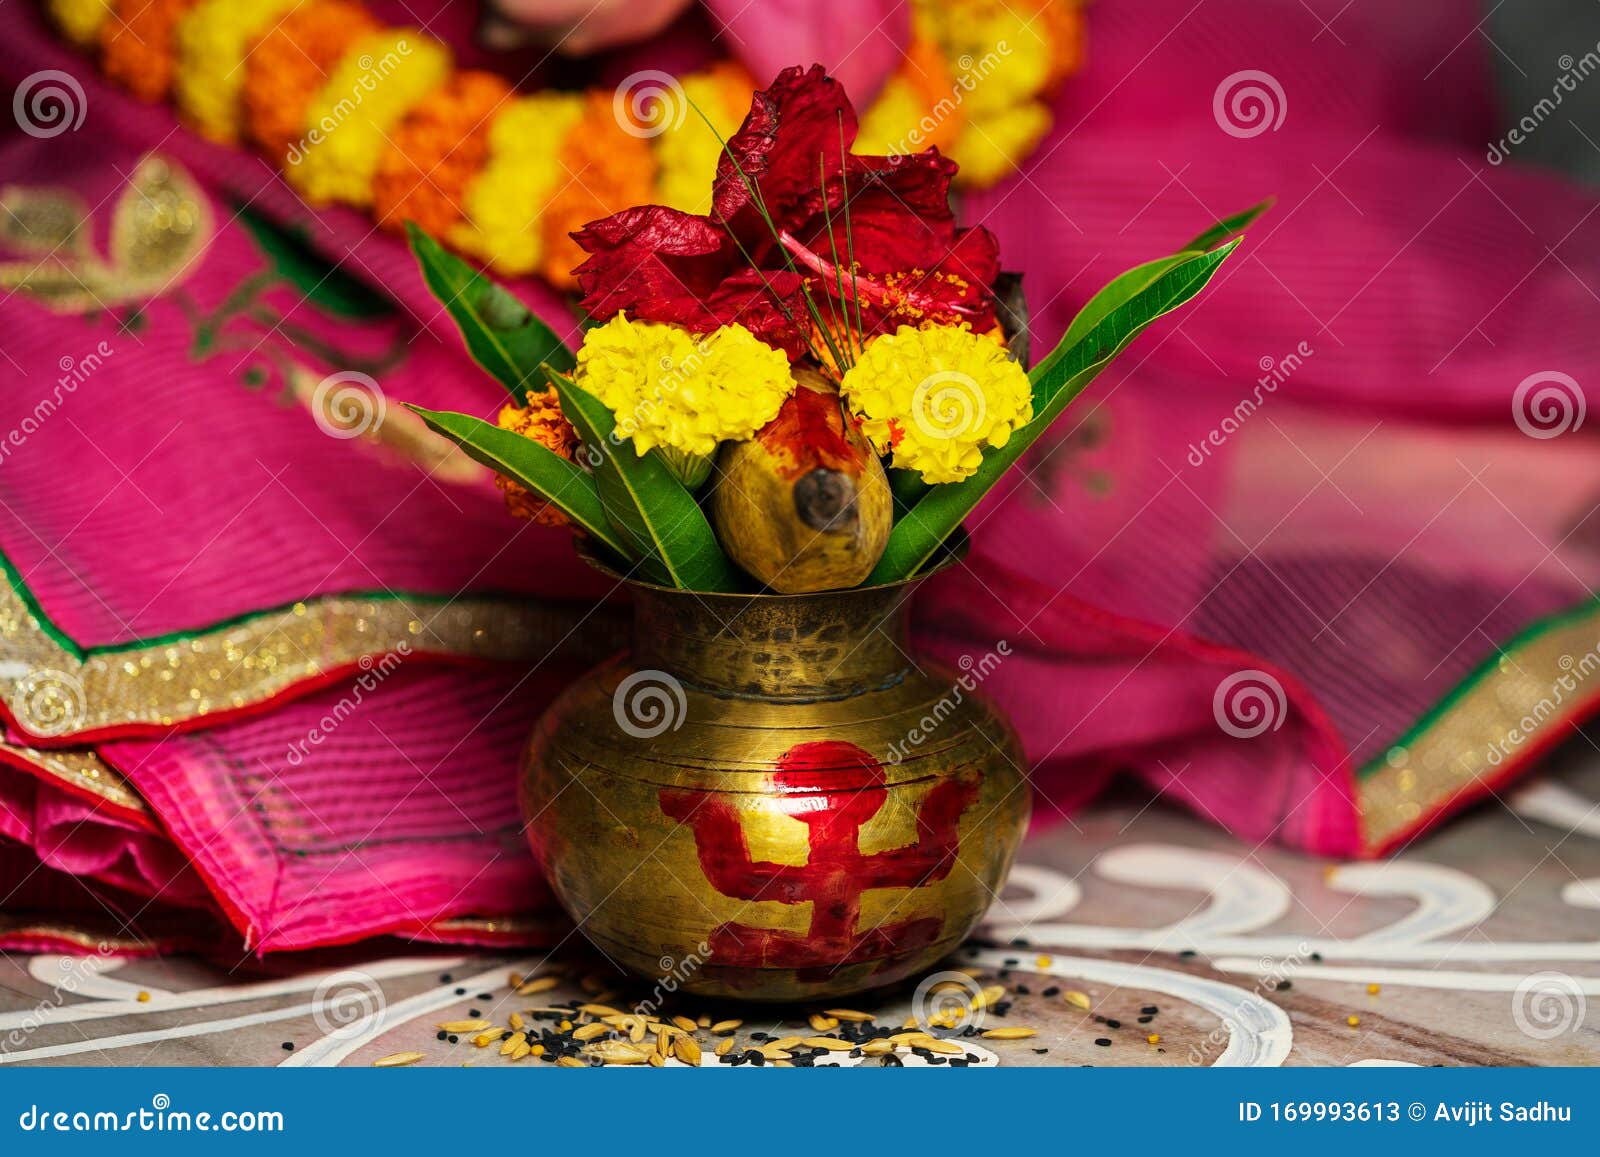 Hindu Puja Ritual Bakcground Image Stock Image - Image of divine, element:  169993613